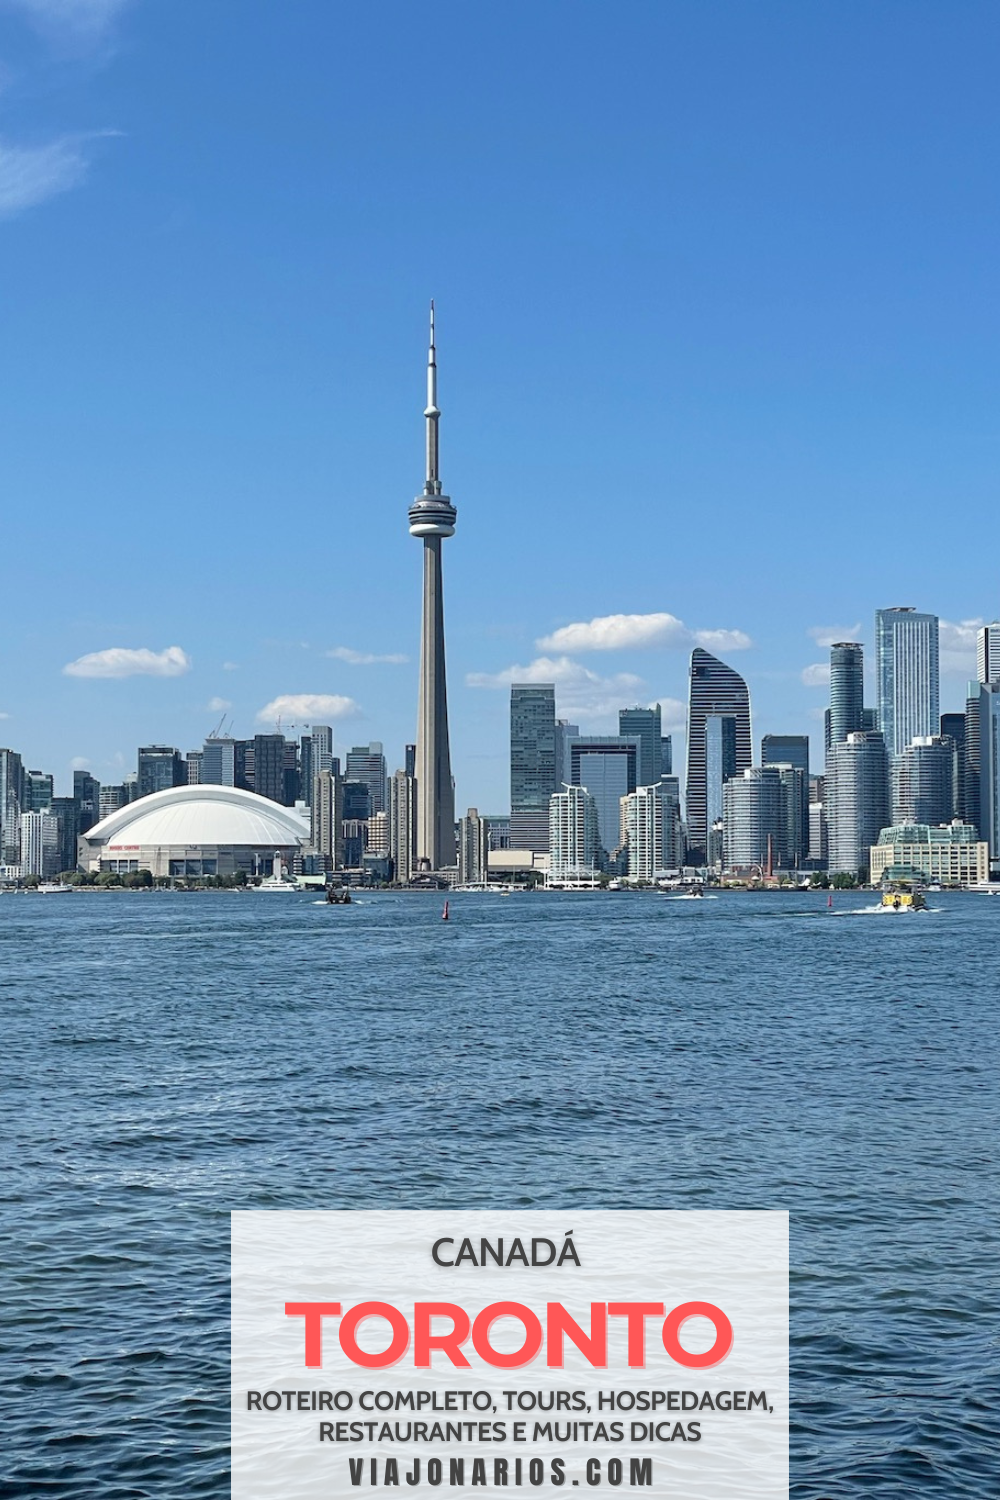 Canadá: Qué hacer en Toronto - Itinerario para 2, 3, 4+ días | https://viajonarios.com/toronto/ | #viajonarios #toronto #canada #roteiro #atracoes #dicas #oque do